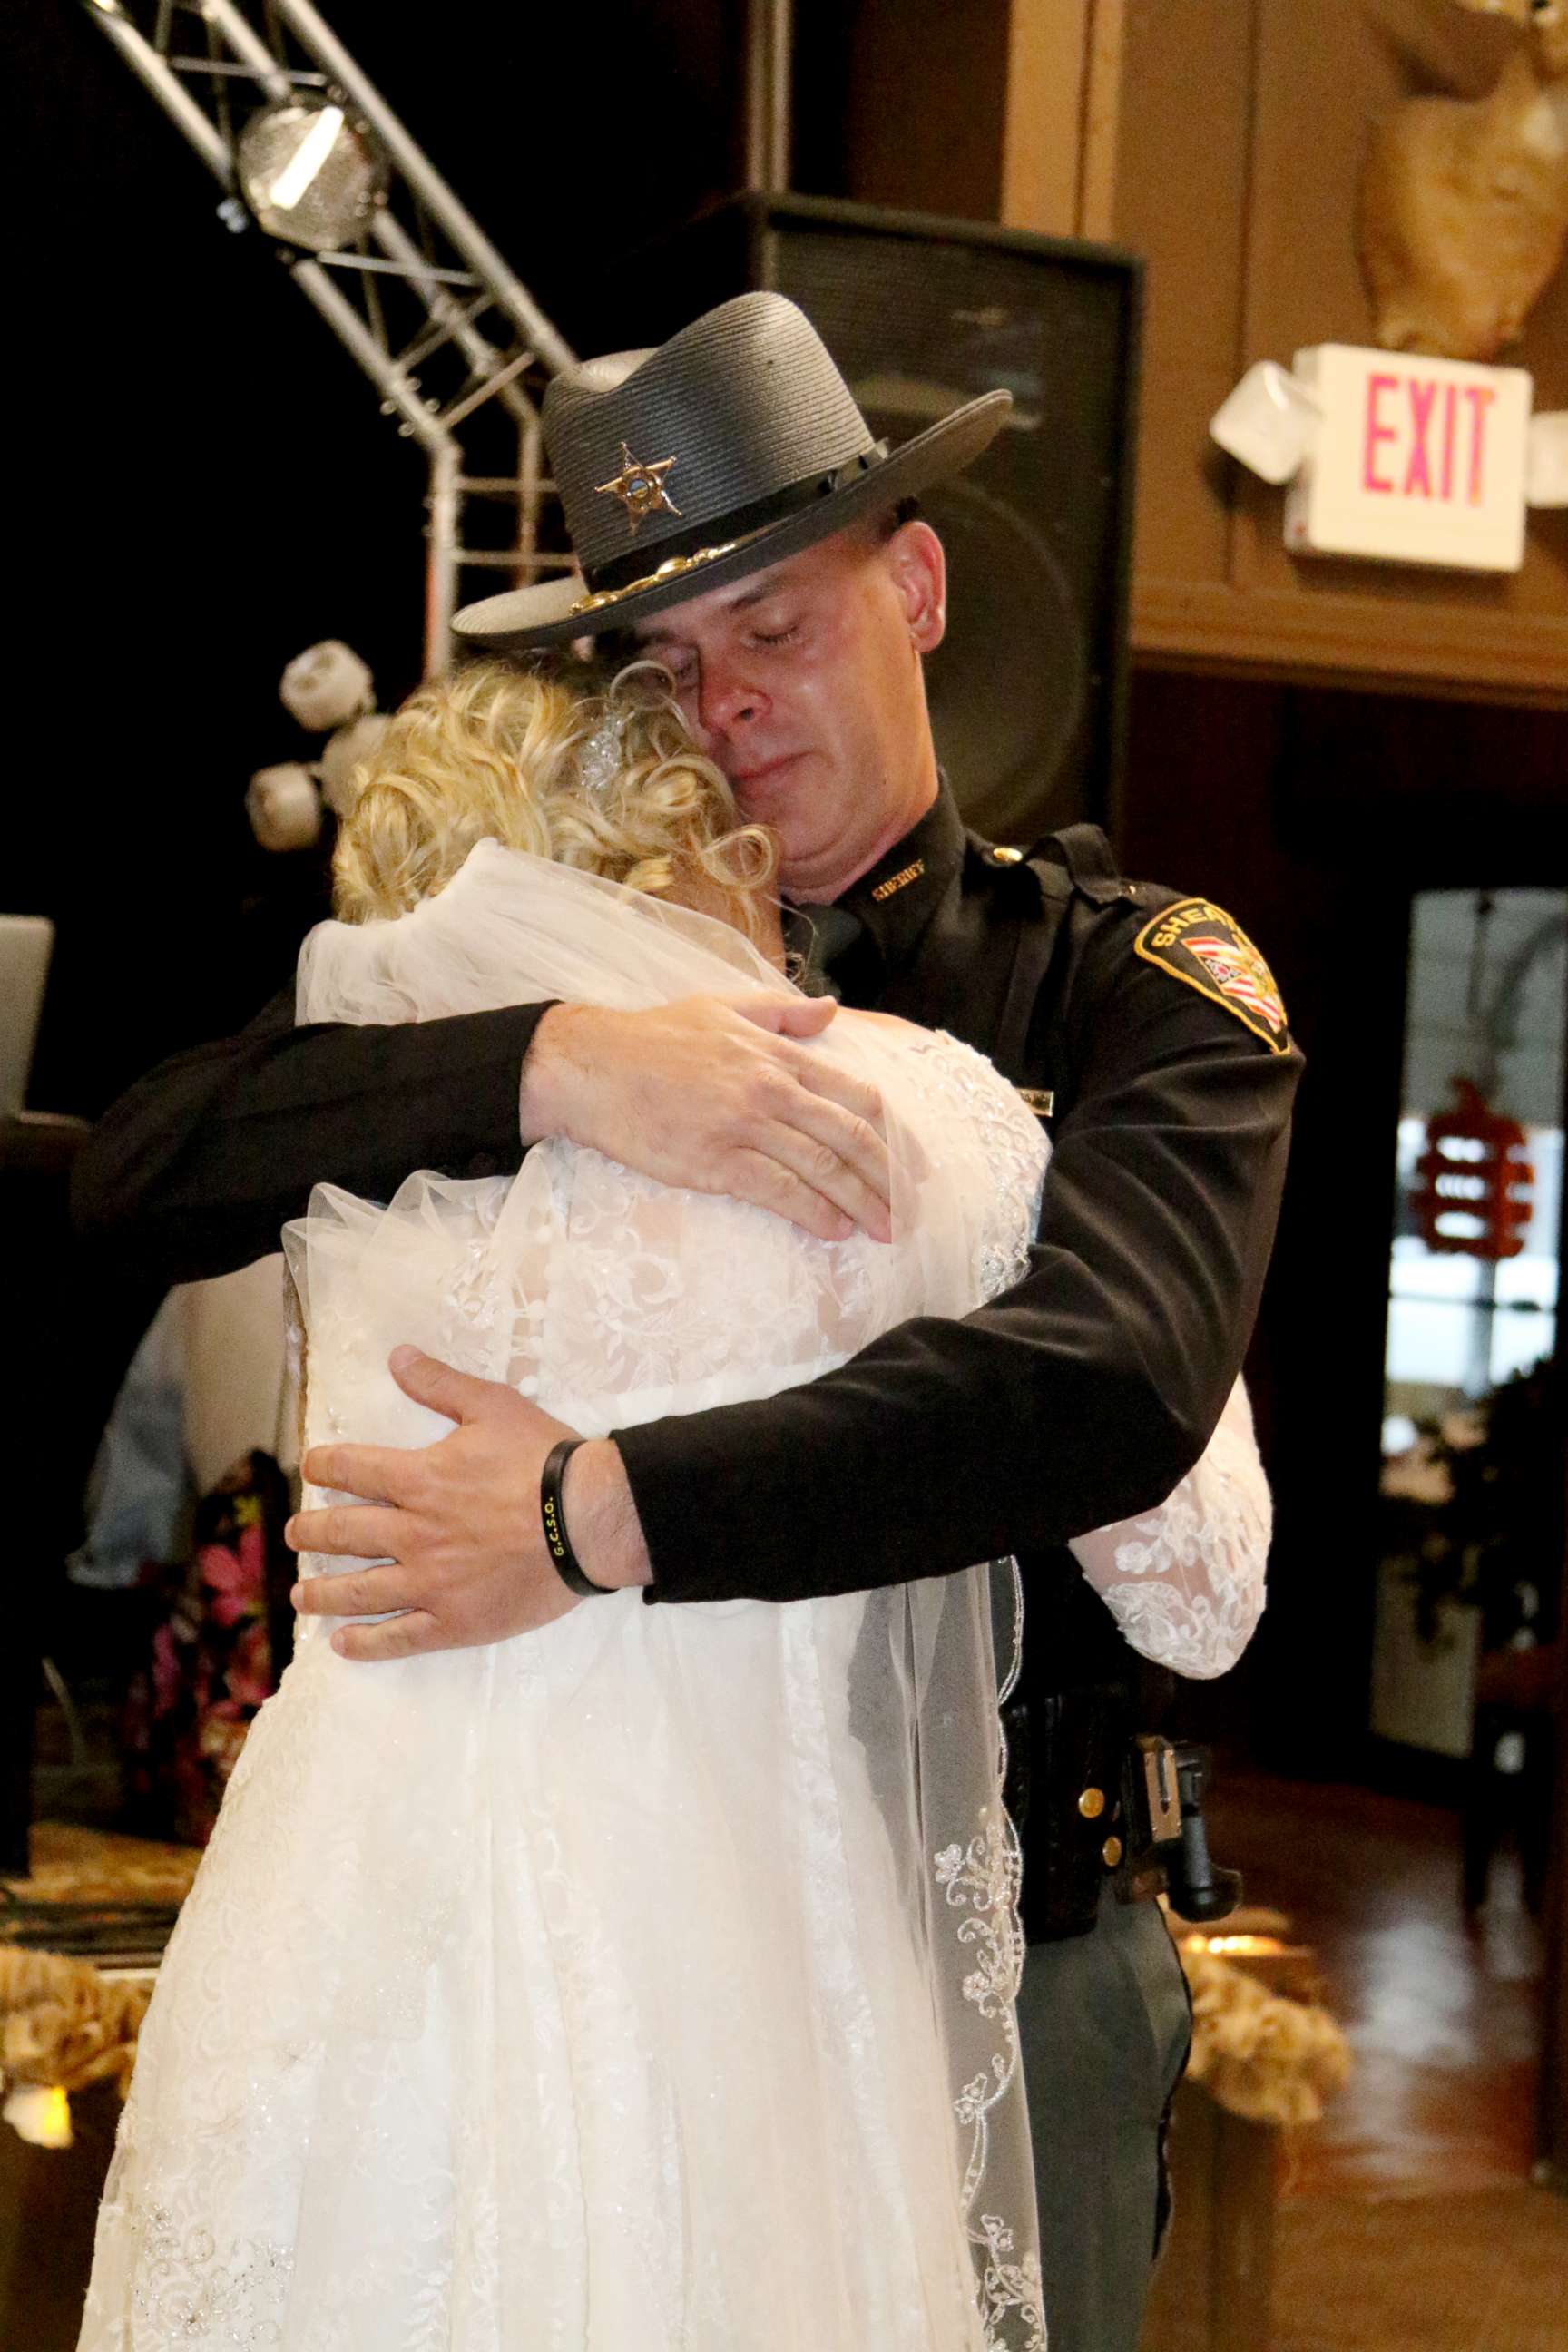 PHOTO: Mikayla Wroten broke down in tears as Sheriff Matt Champlin, her late father's best friend, surprised her with a dance.